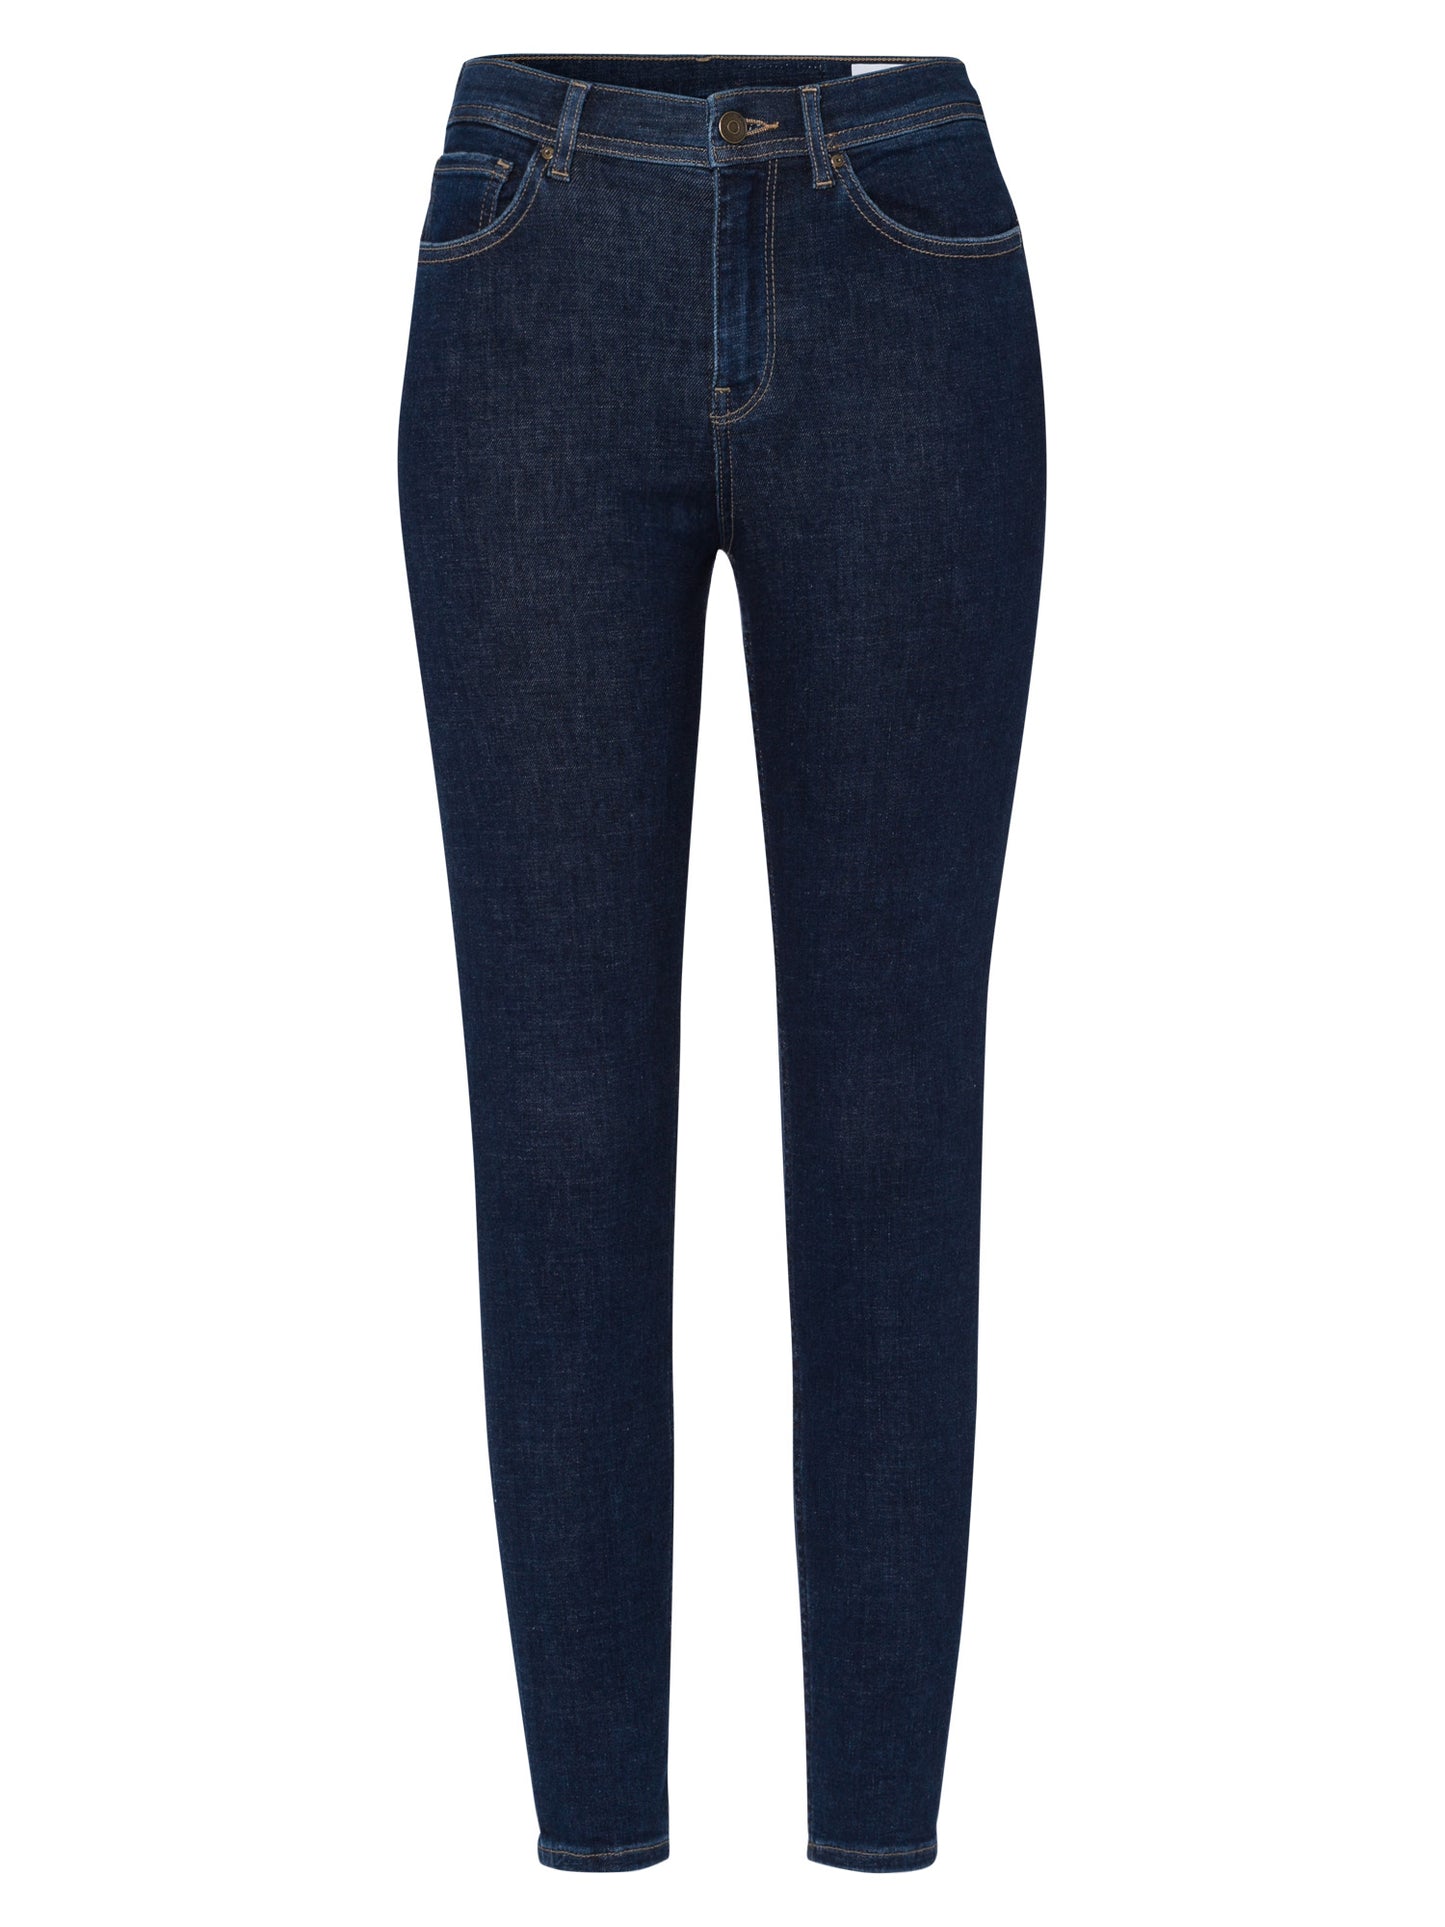 Judy women's jeans super skinny fit high waist ankle length dark blue